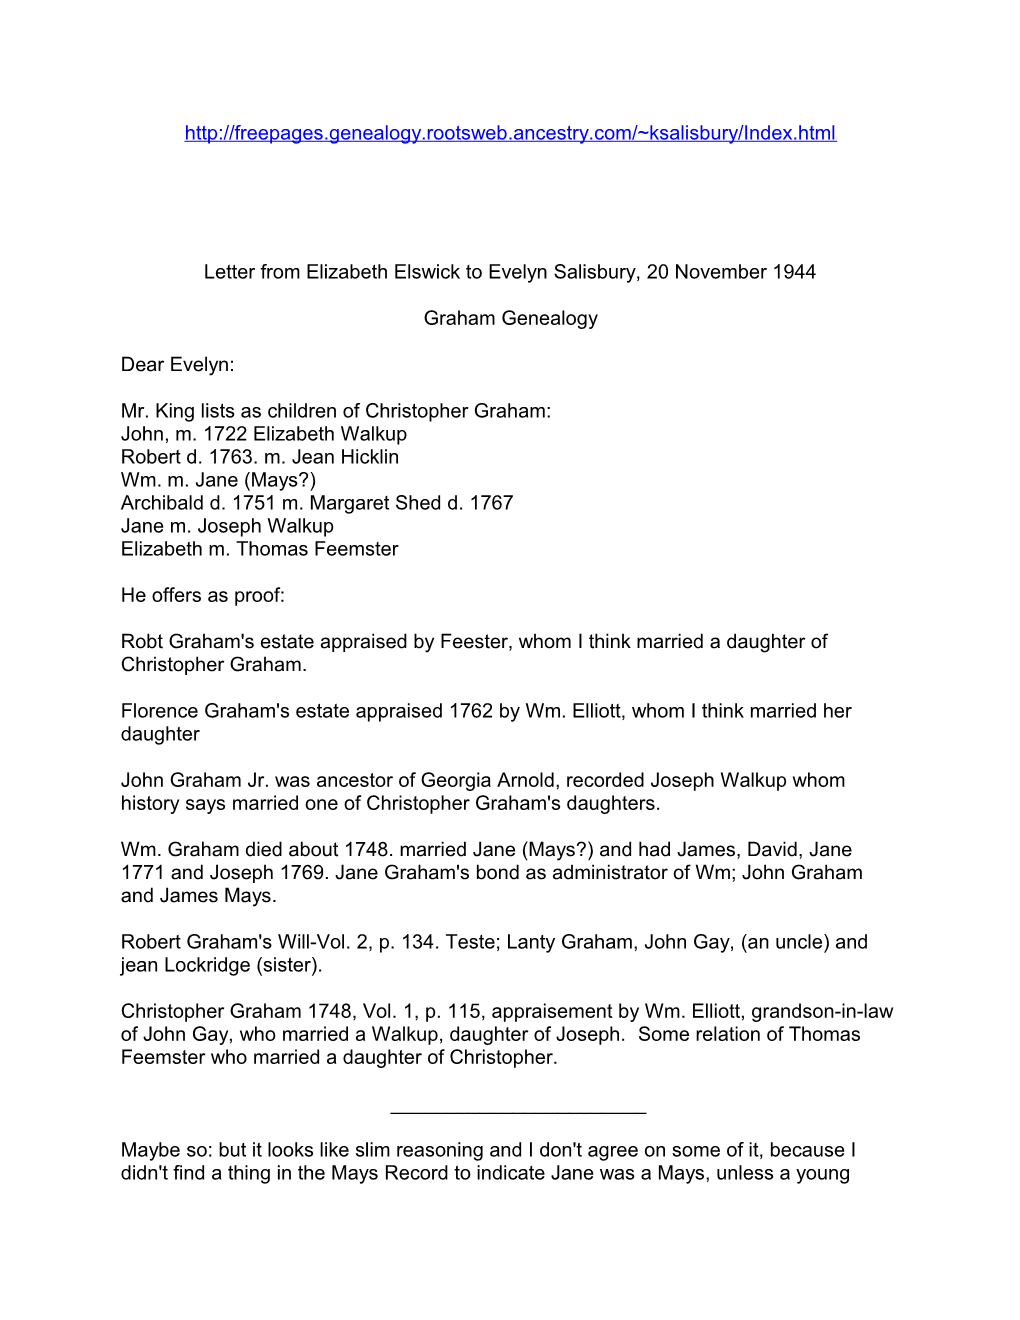 Letter from Elizabeth Elswick to Evelyn Salisbury, 20 November 1944